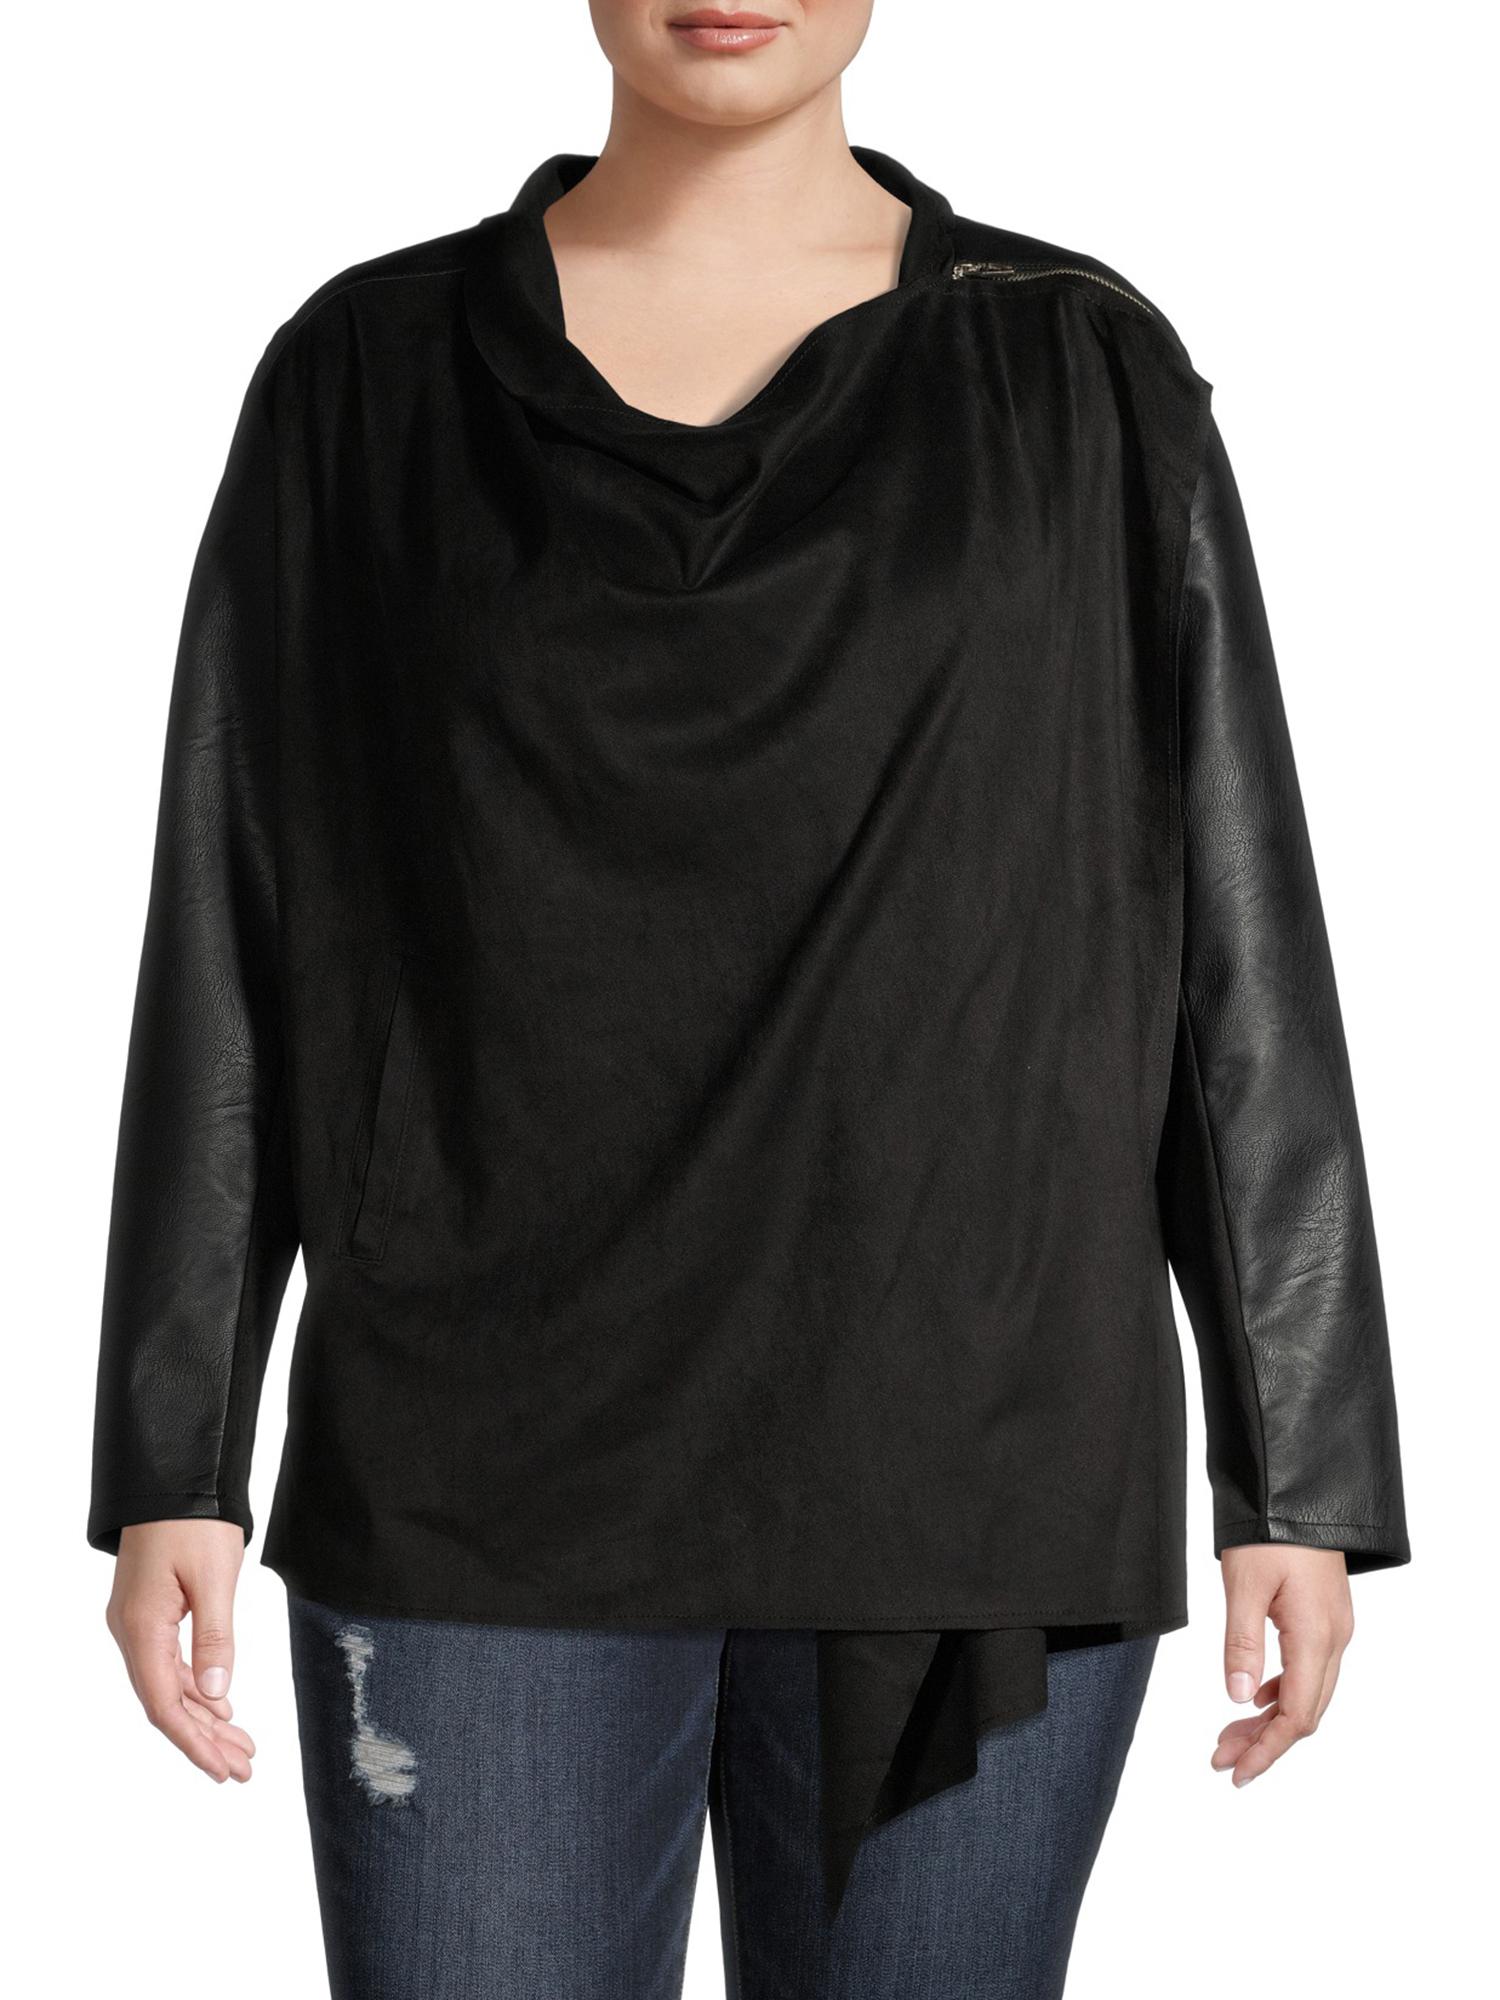 https://d17dh3qz5tugbu.cloudfront.net/production/products/images/1114432/original/alivia-ford-women-s-plus-size-drape-front-vegan-leather-jacket-with-zipper-detail.jpg?1616241618